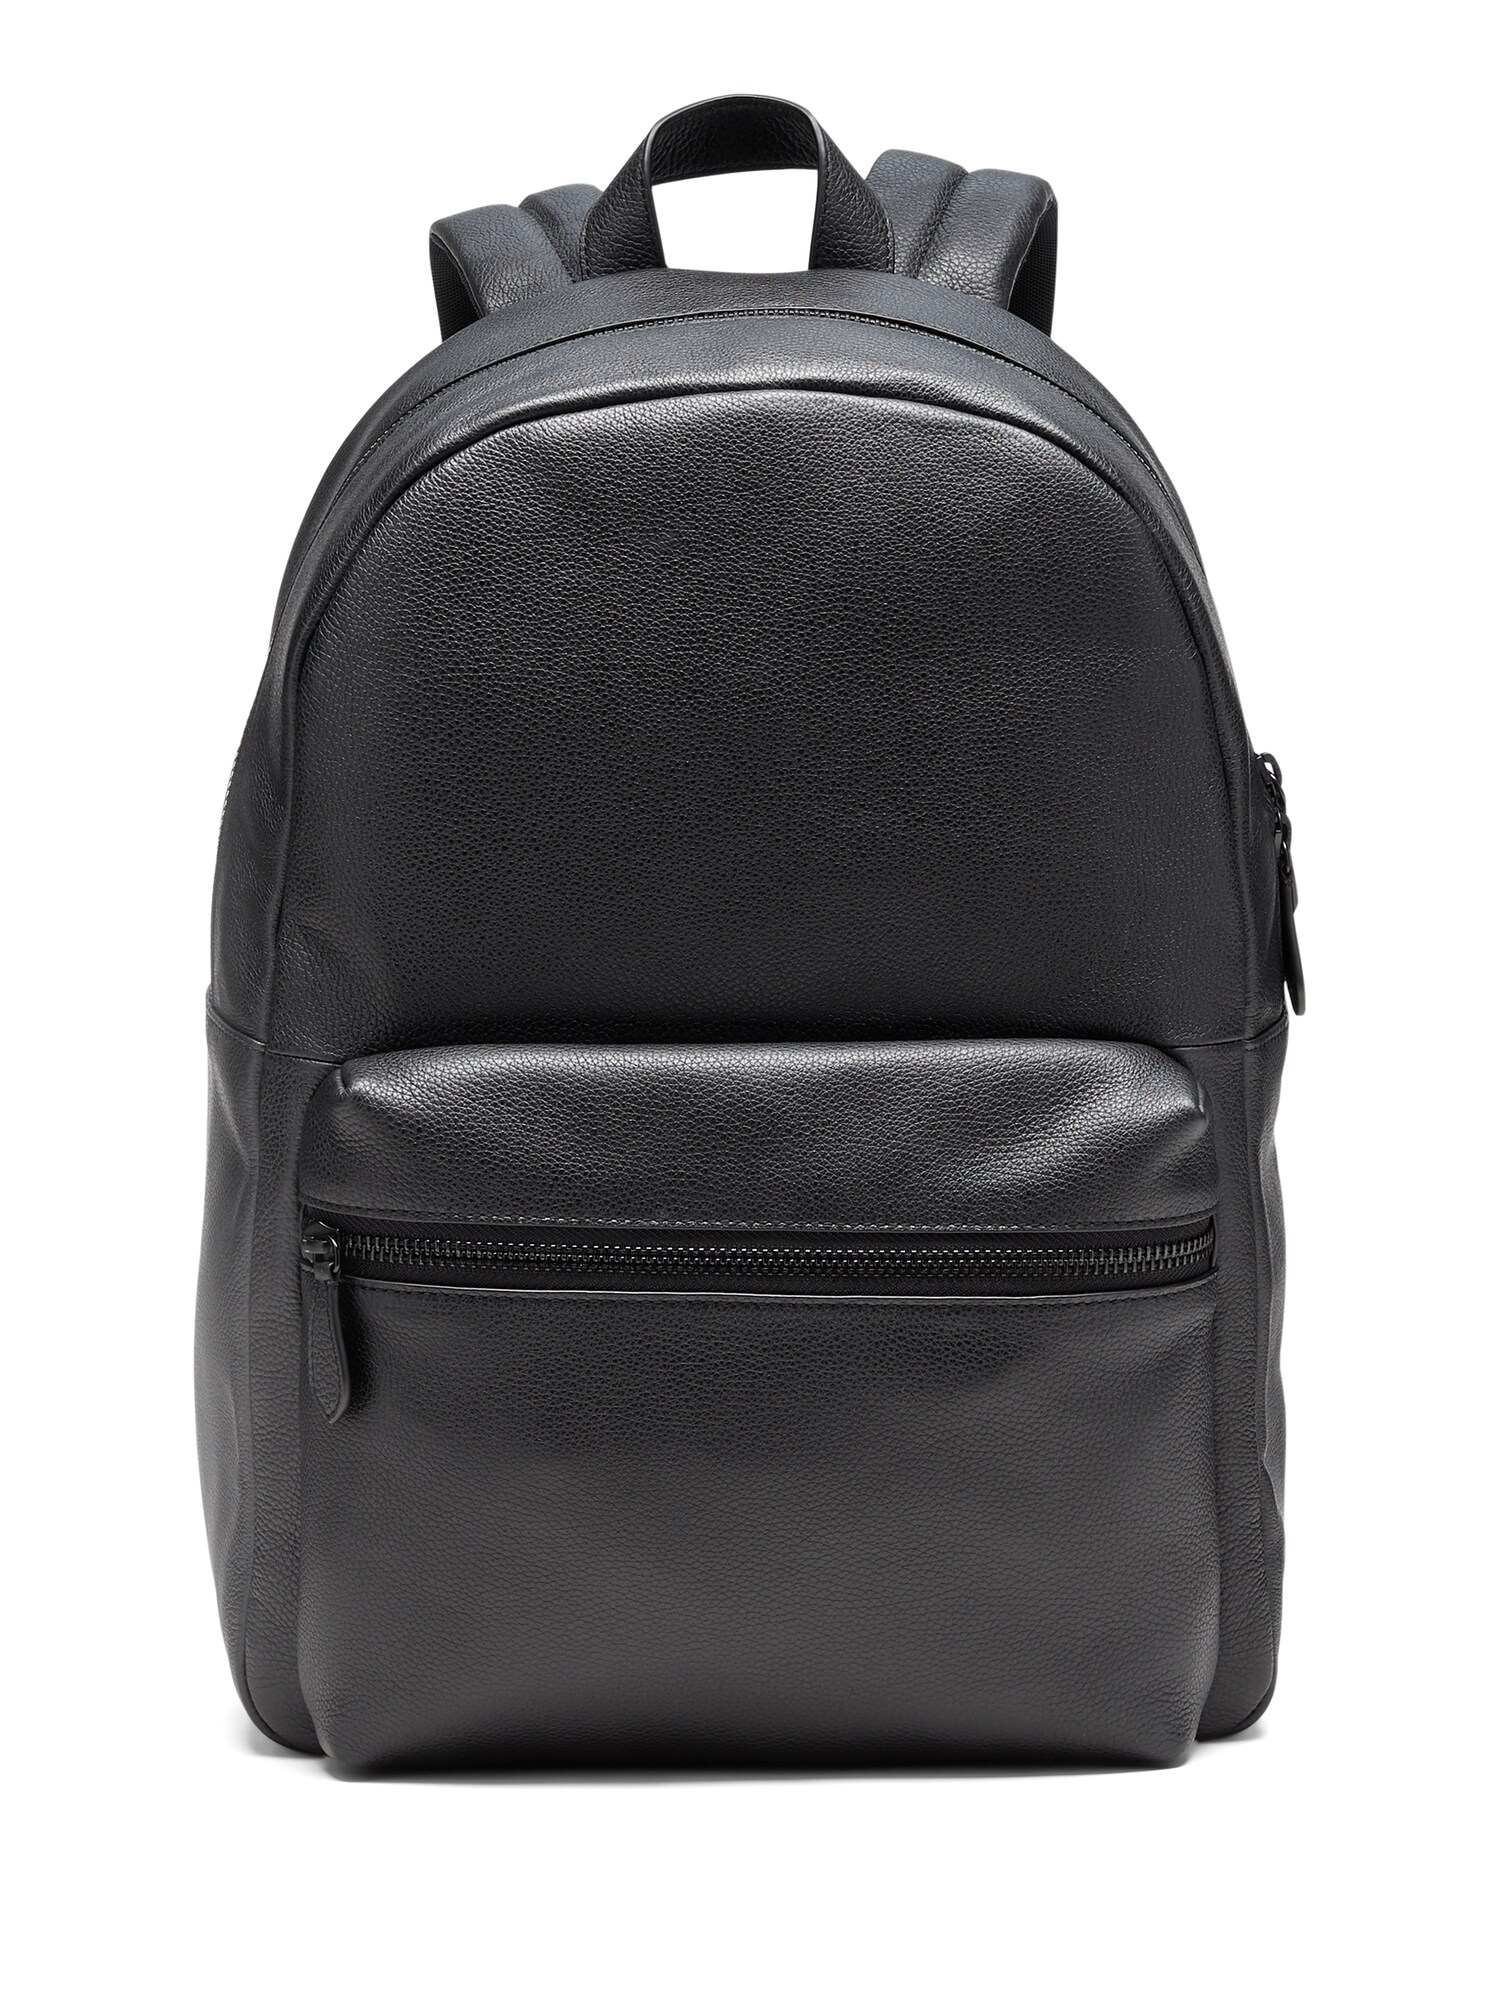 lumzag backpack price